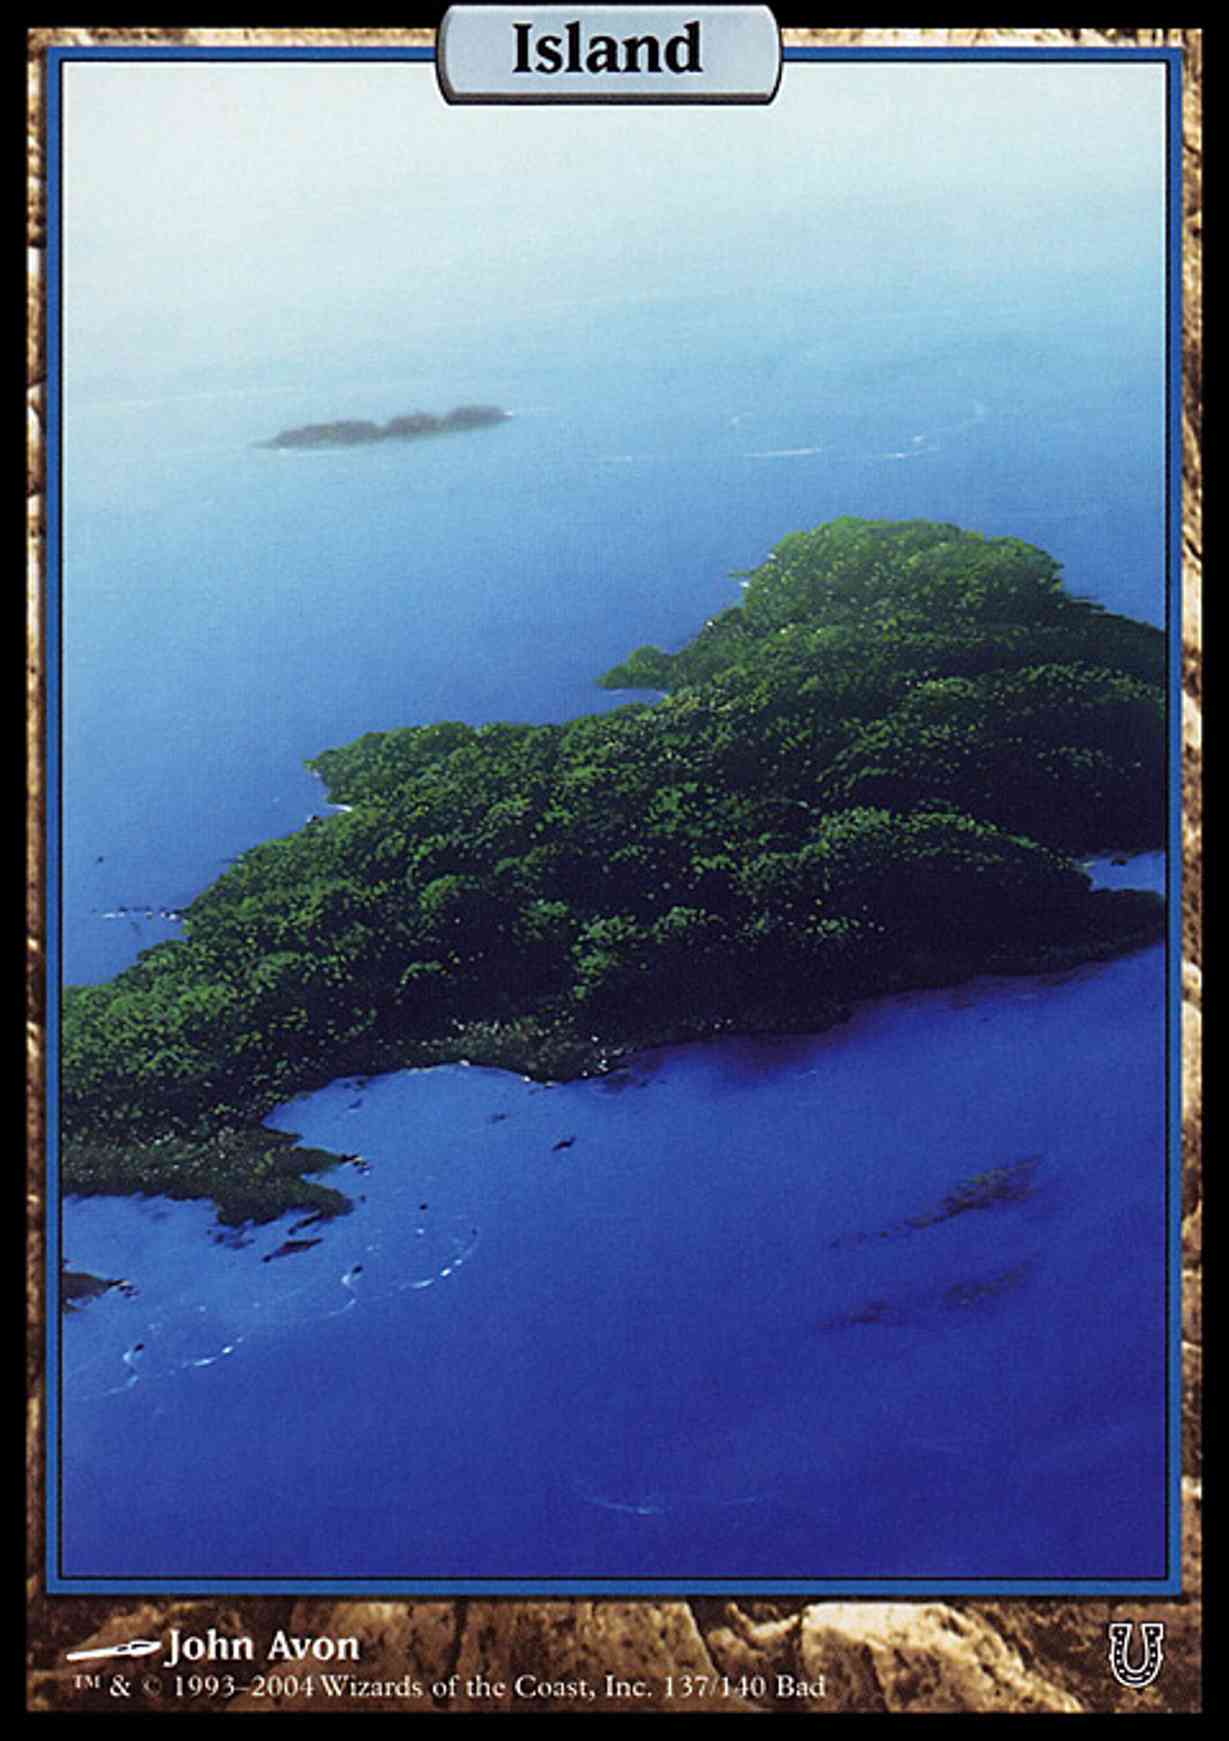 Island - Full Art magic card front